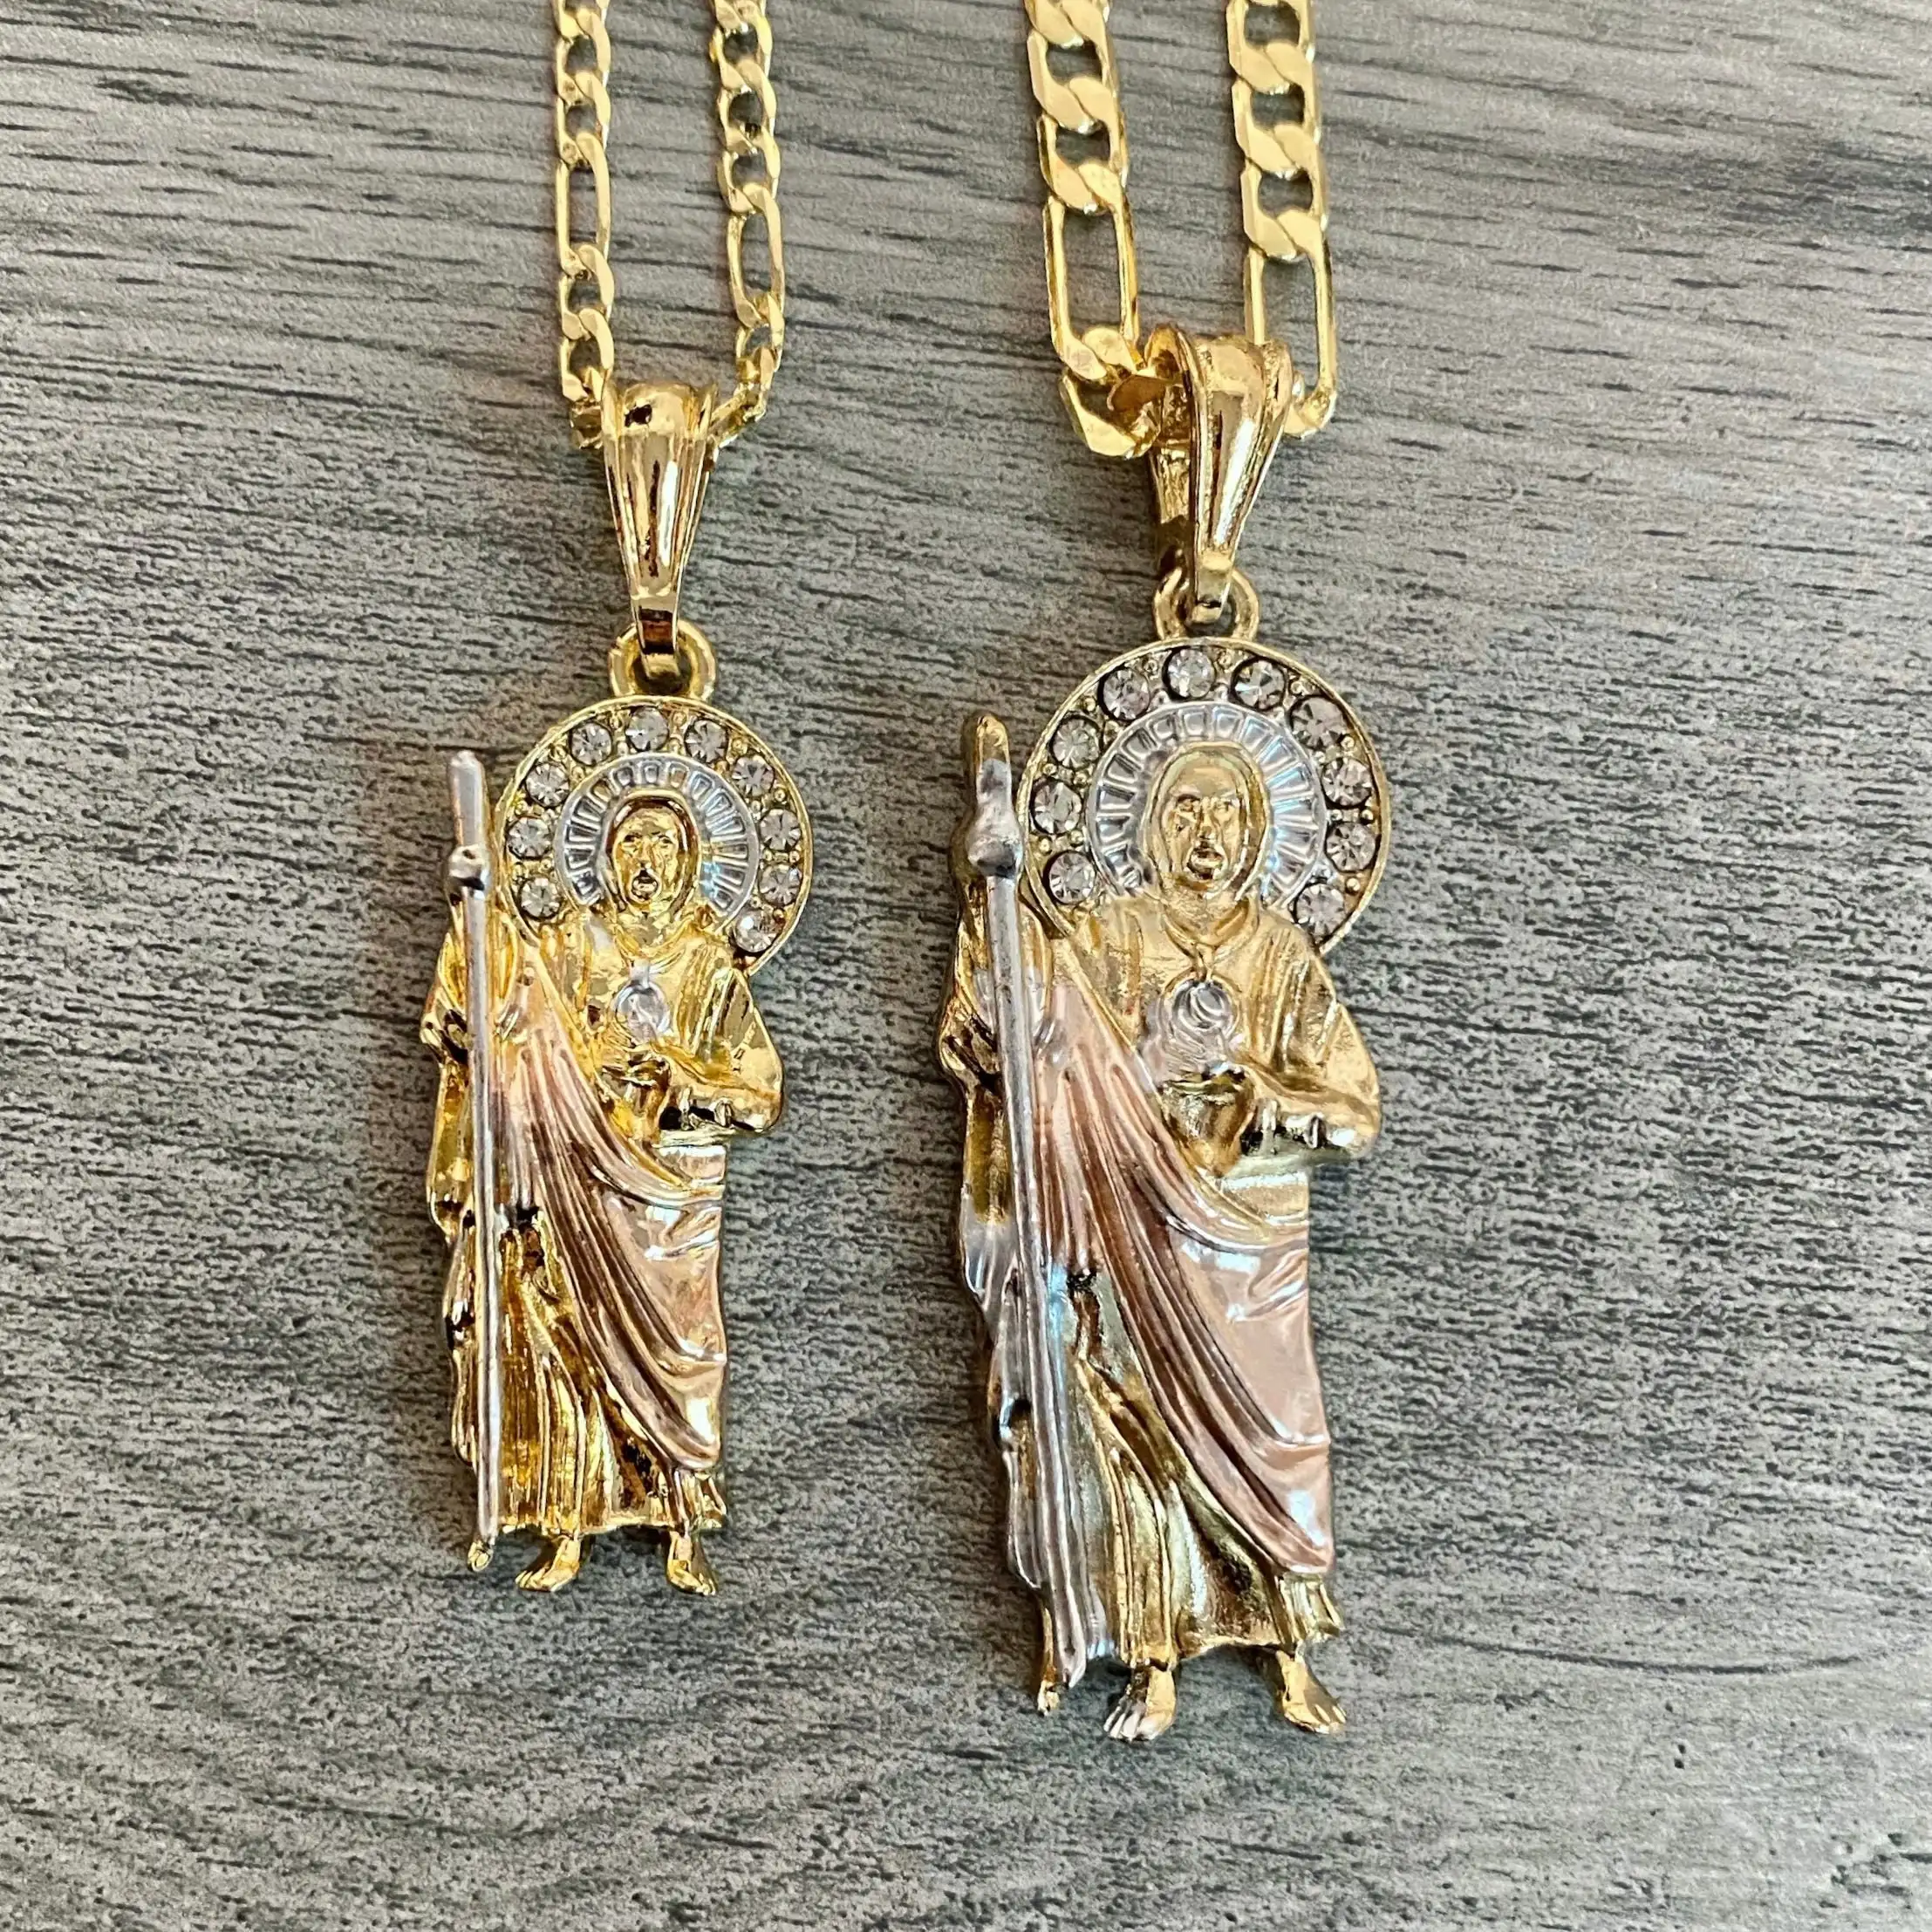 DUYIZHAO Hip Hop Saint Jude Diamond Charms Pendant Necklace 14K Gold San Judas Medalla Diamante Oro Laminado Religious Jewelry